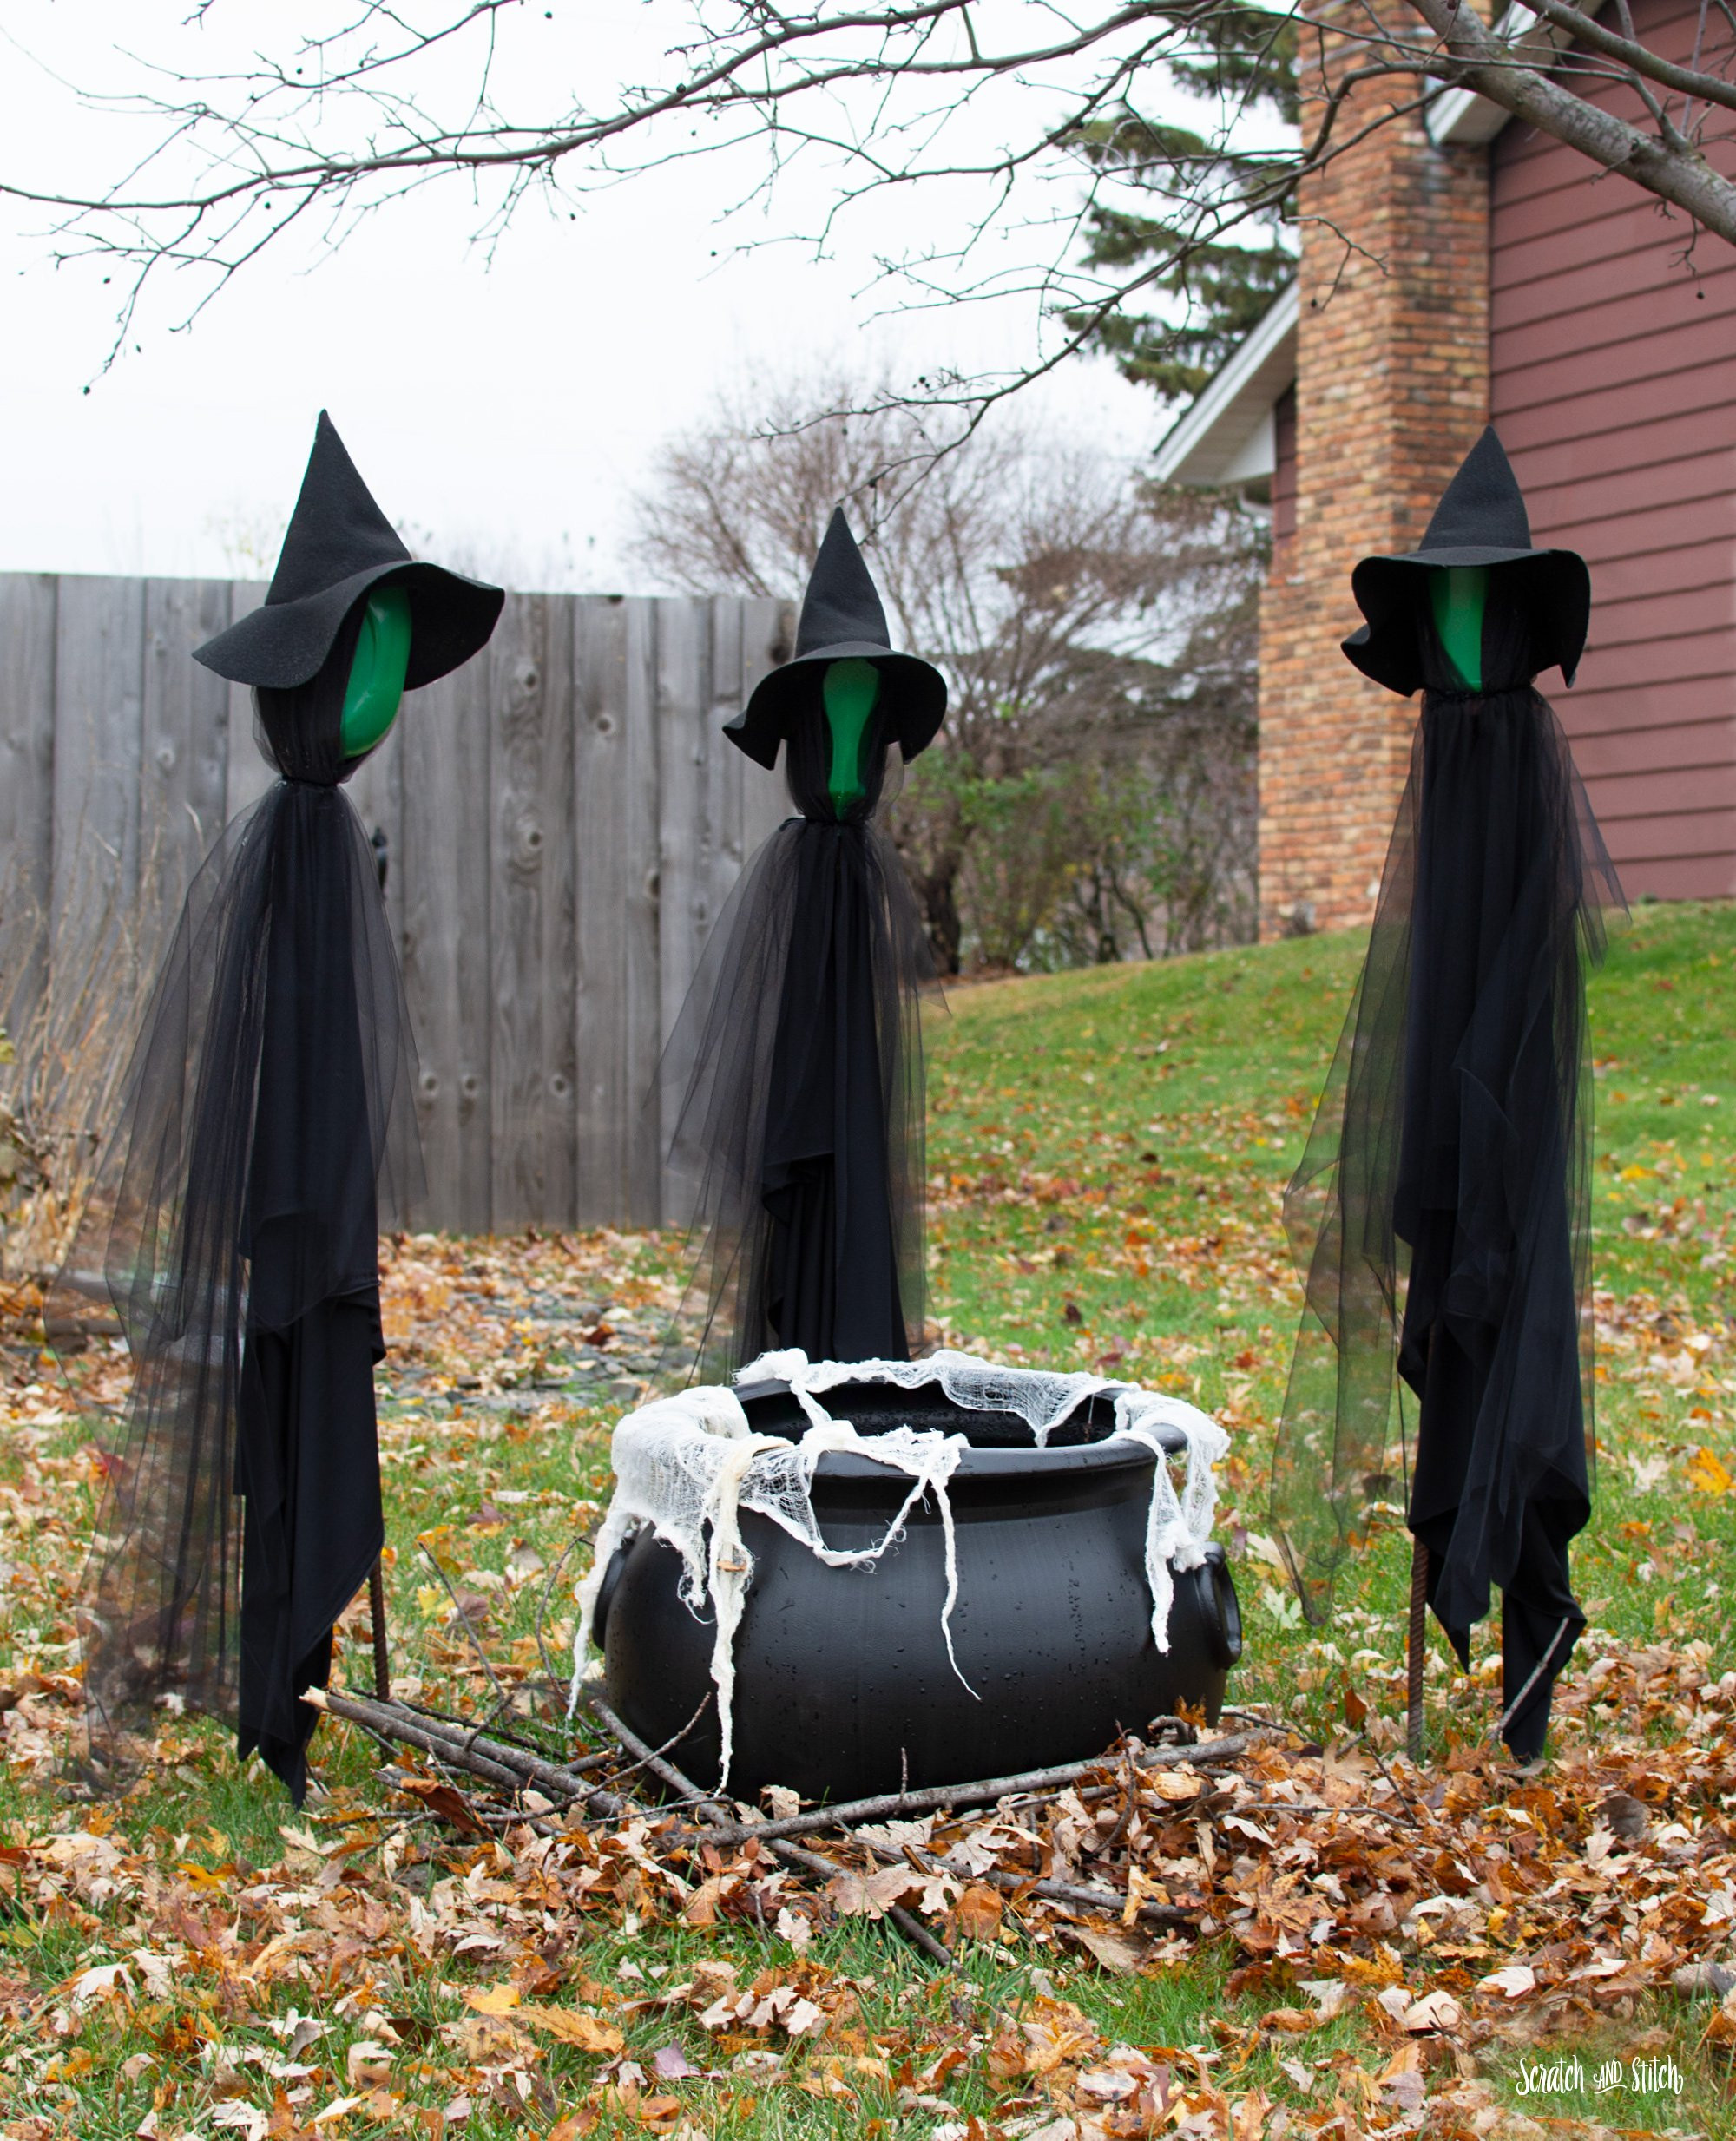 Best ideas about Halloween Decorations DIY
. Save or Pin DIY Halloween Decorations Includes FREE Witch Hat Pattern Now.